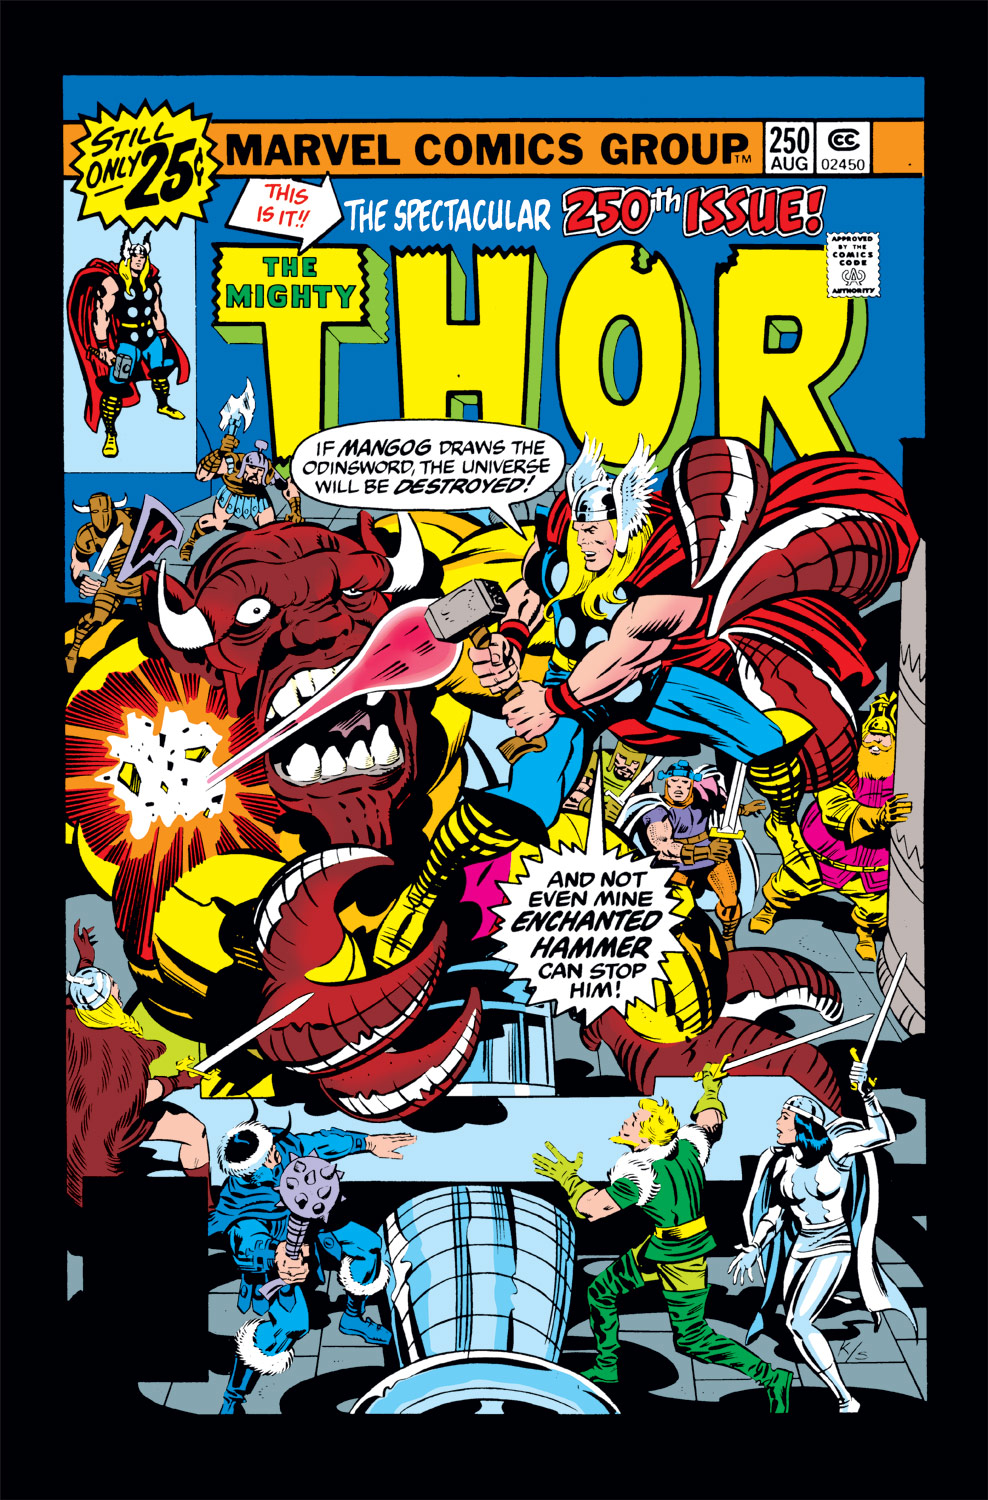 Thor (1966) #250